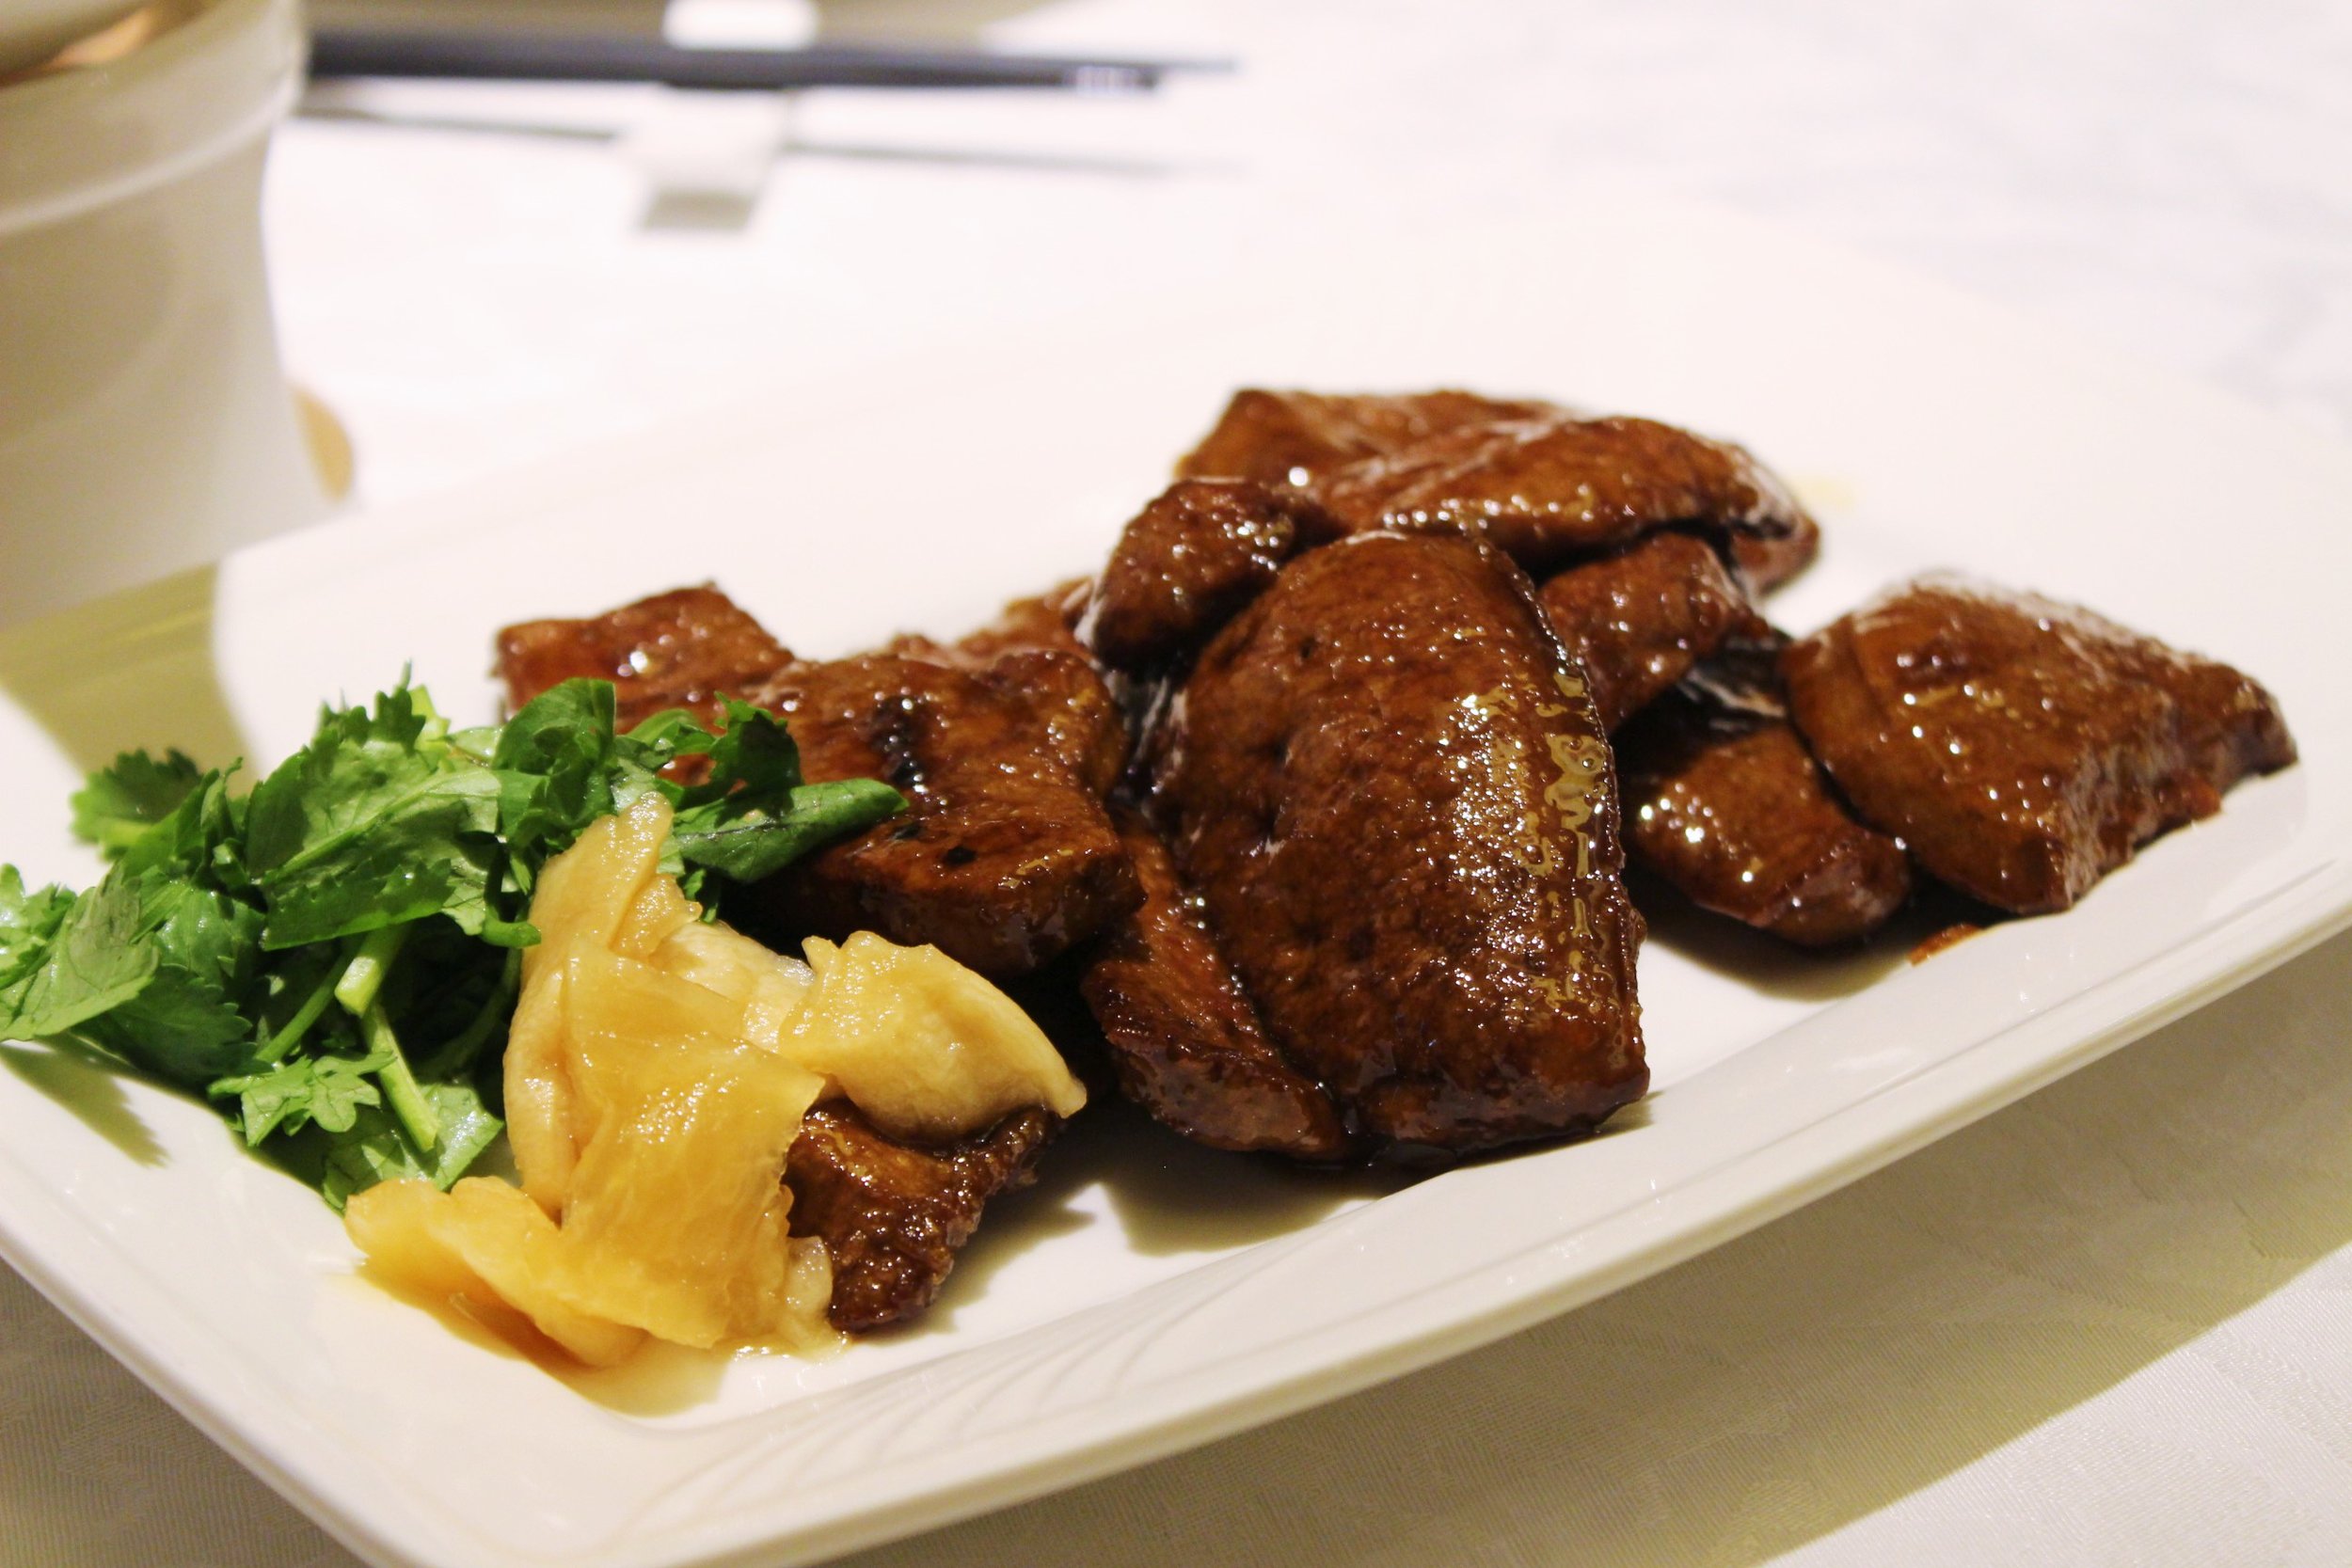 Wok-seared pork liver with coriander 煎豬肝 